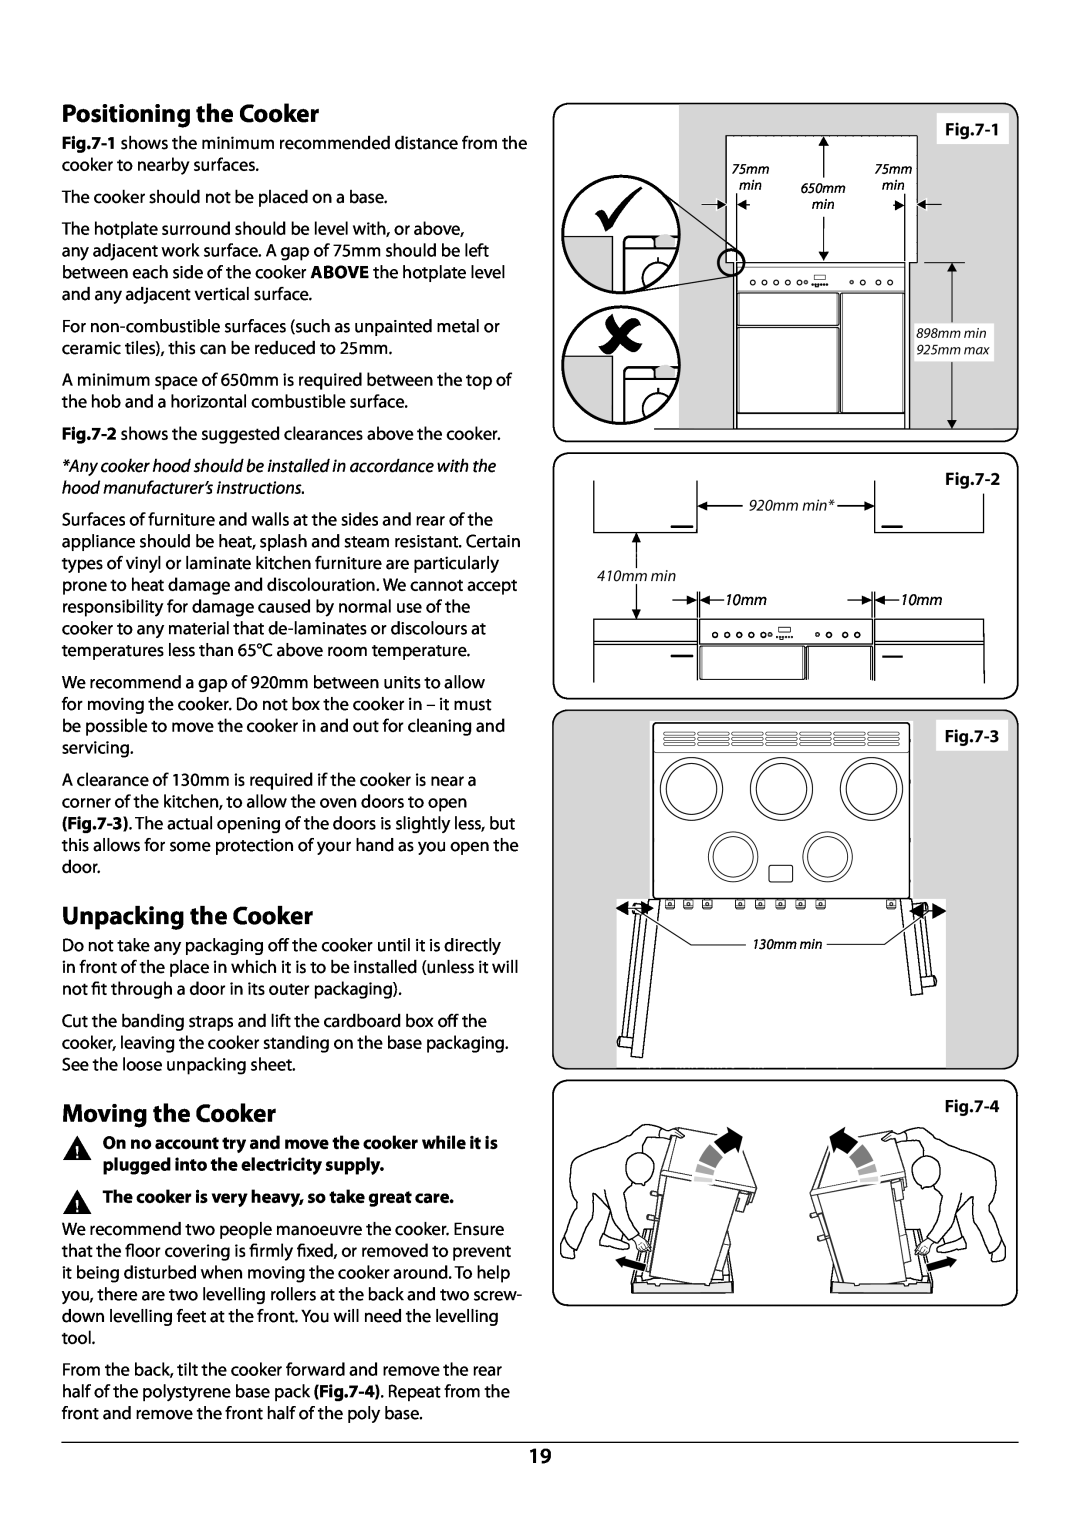 Rangemaster U109976 - 02 manual Positioning the Cooker, Unpacking the Cooker, Moving the Cooker, 3, 4 